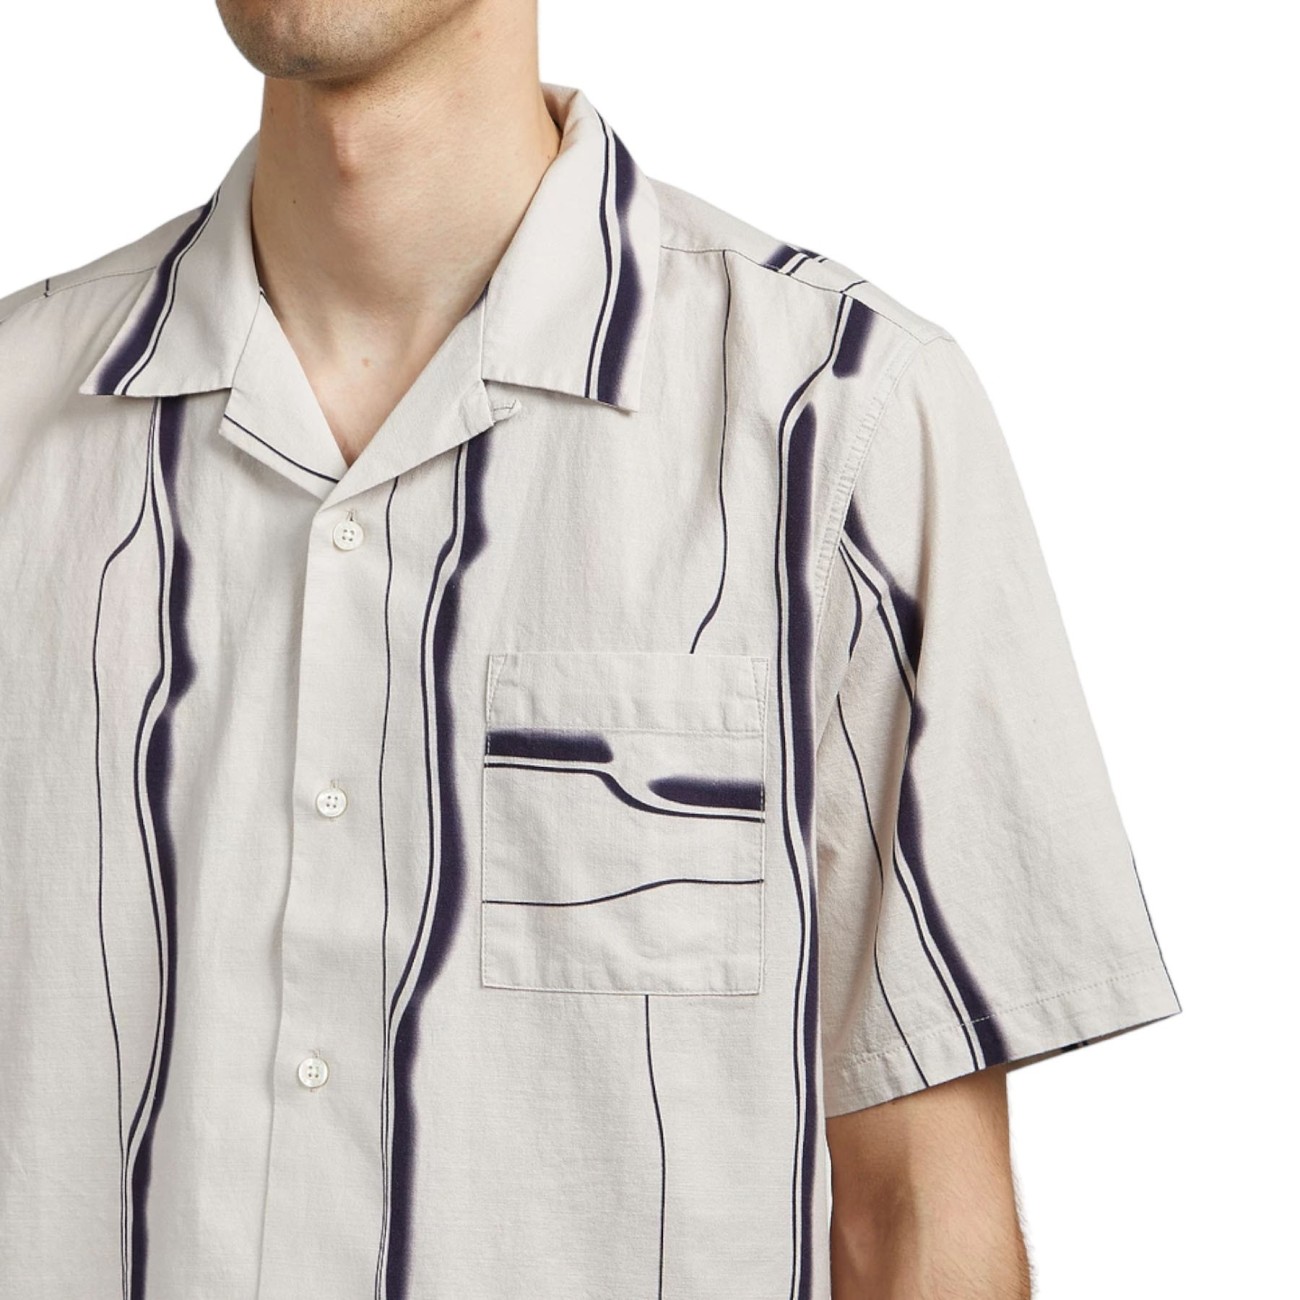 Edwin gray short sleeve shirt